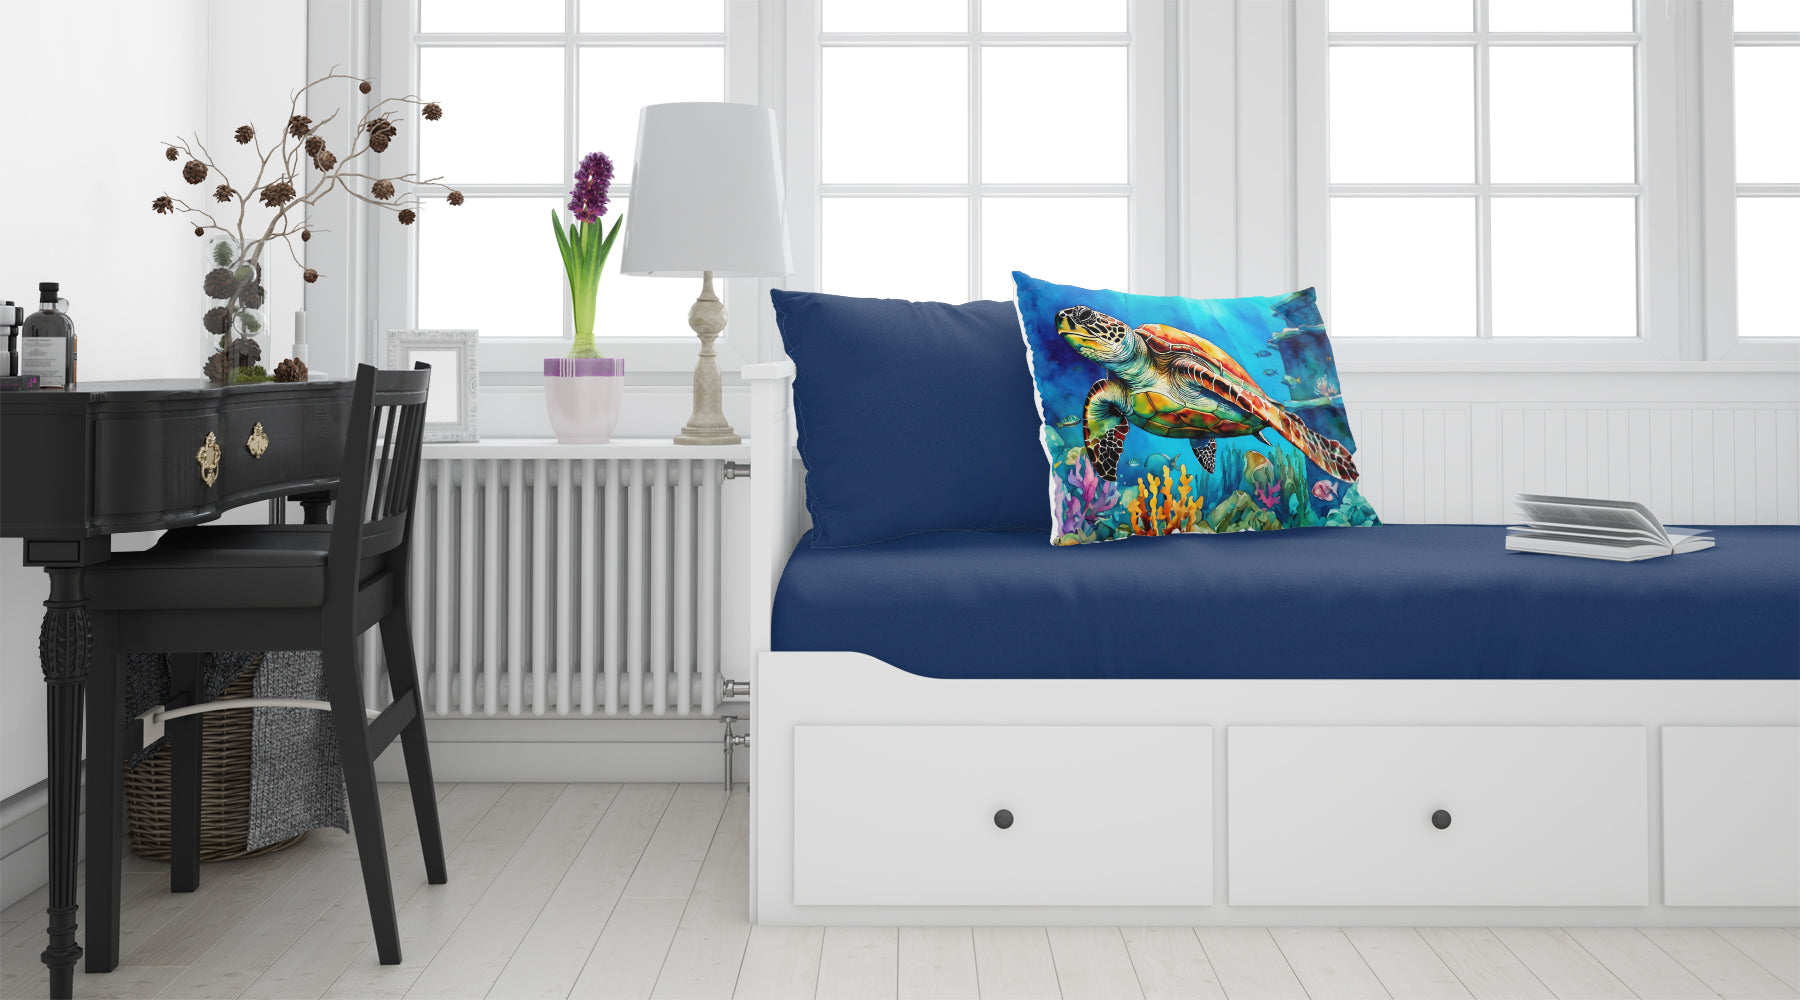 Buy this Loggerhead Sea Turtle Standard Pillowcase